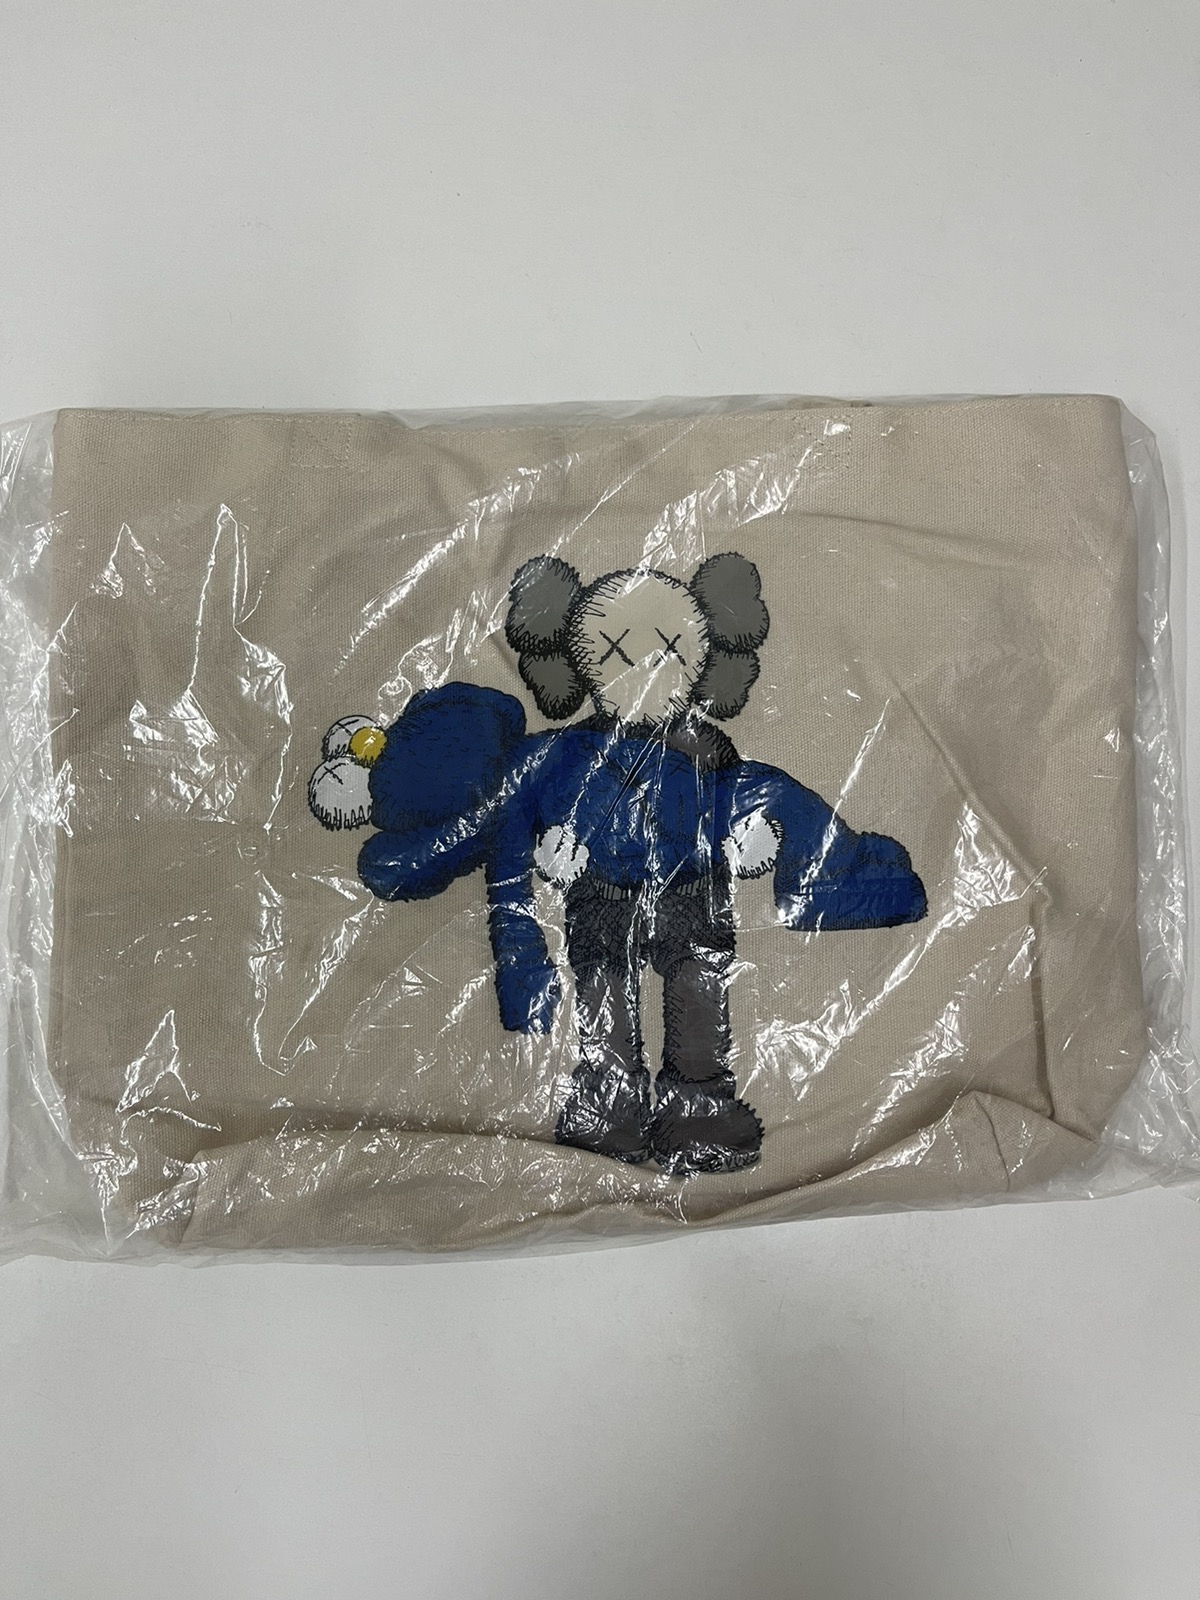 Very Rare - Kaws Tote Bag Limited Edition / Uniqlo / Evangelion - 10